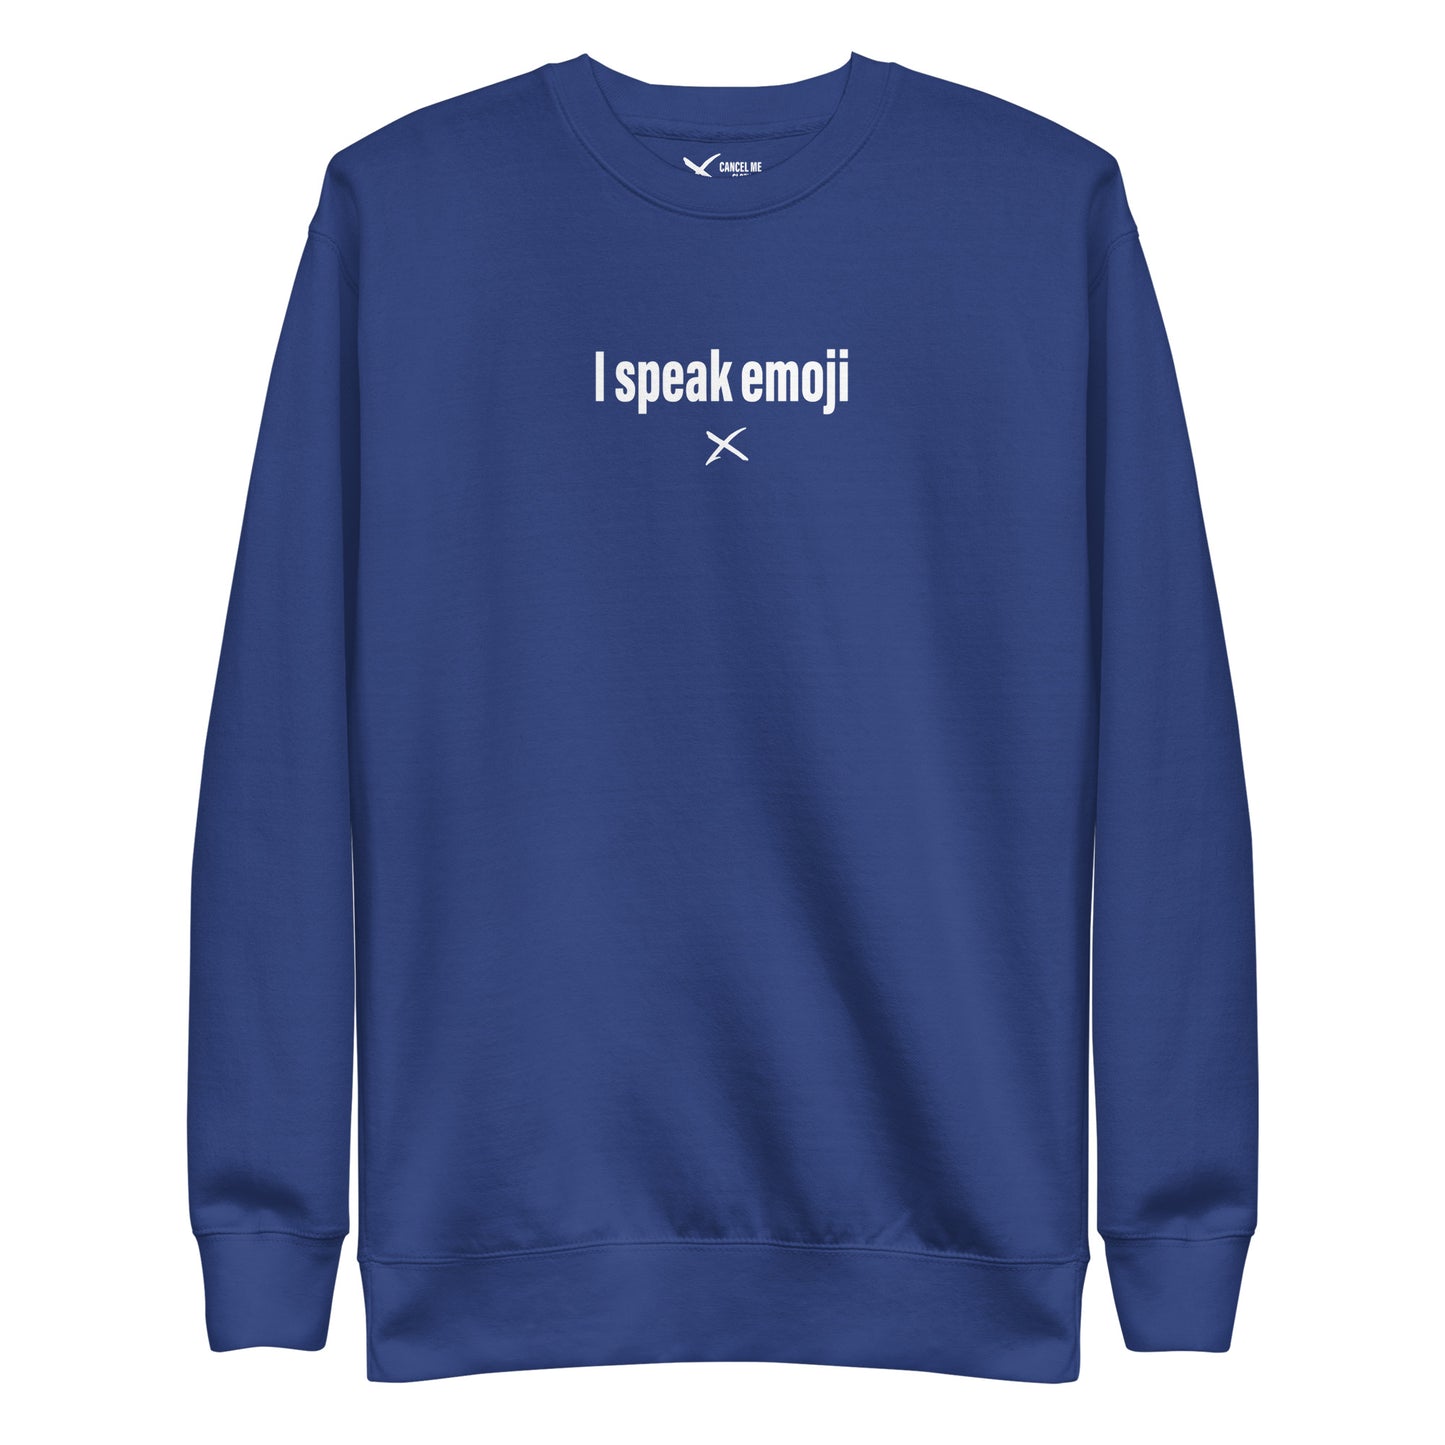 I speak emoji - Sweatshirt